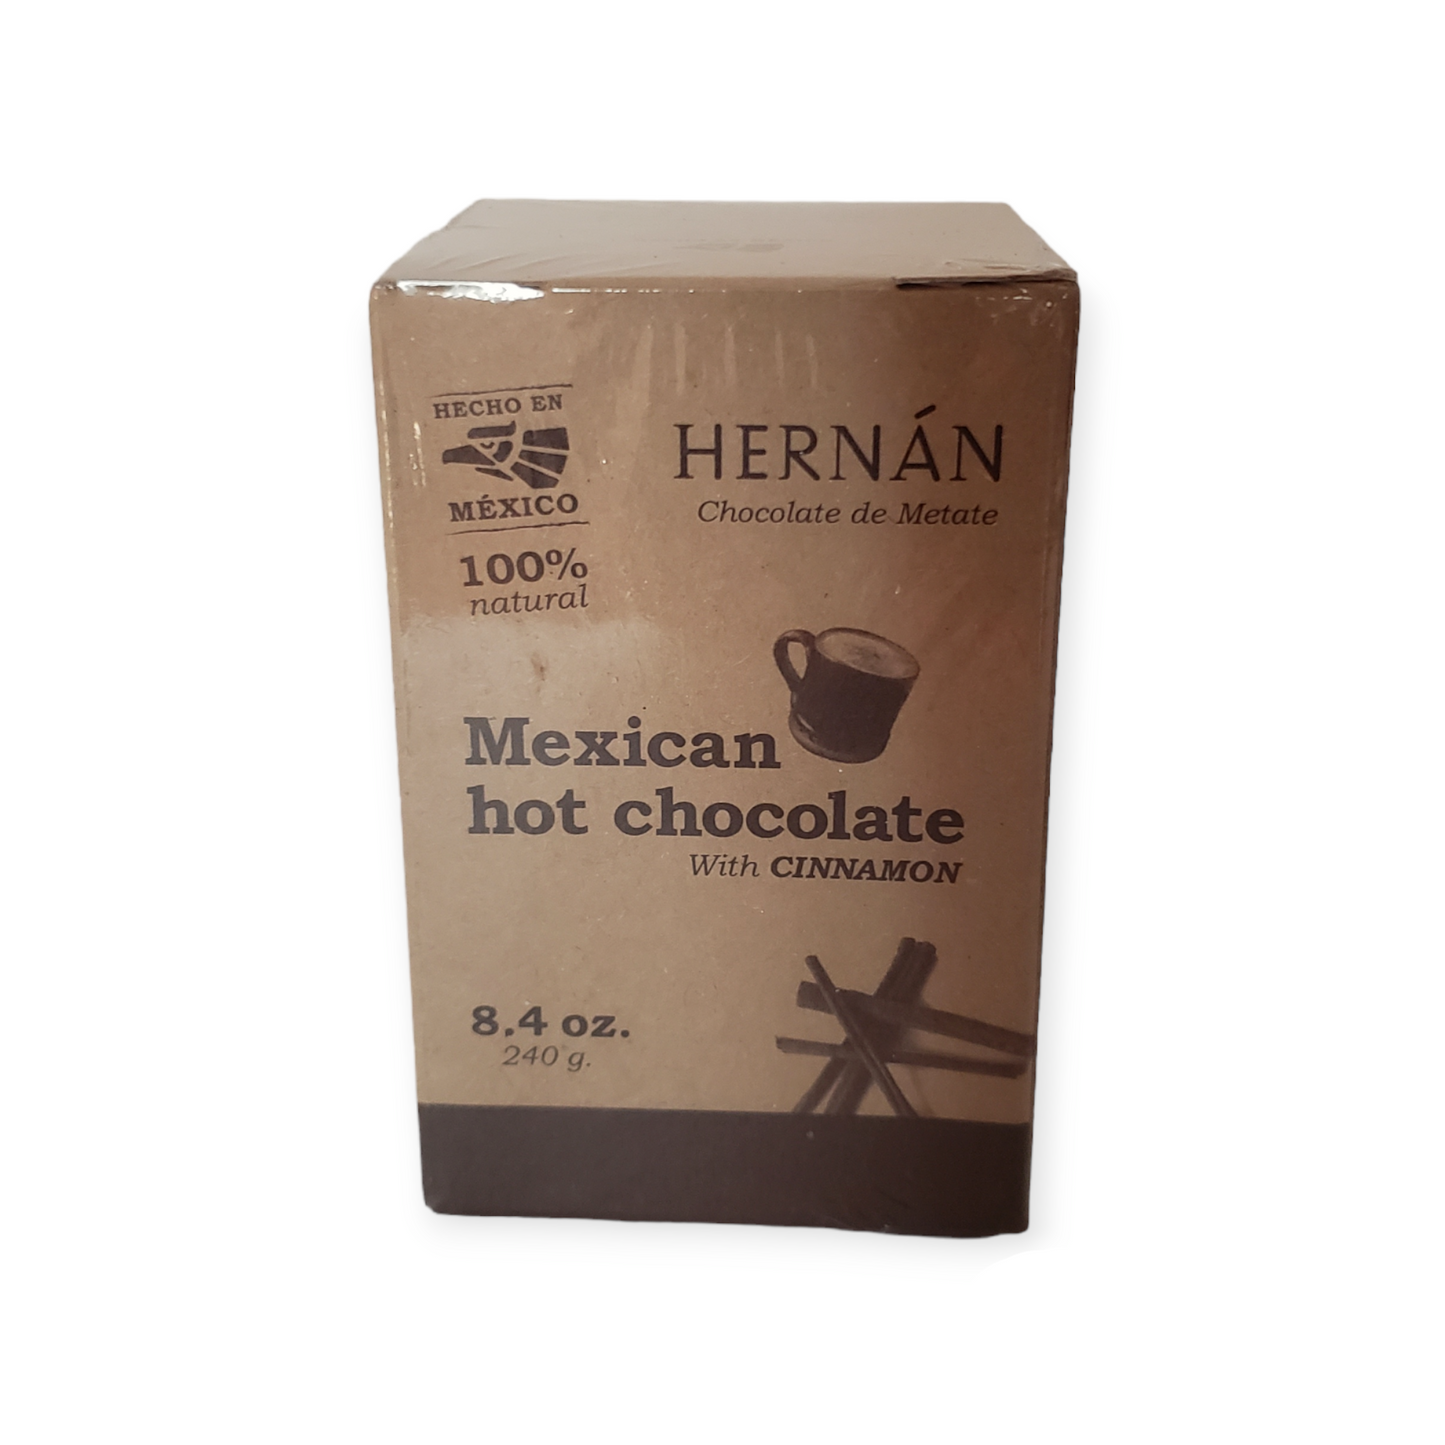 Hernan Mexican Hot Chocolate from Chiapas Mexico